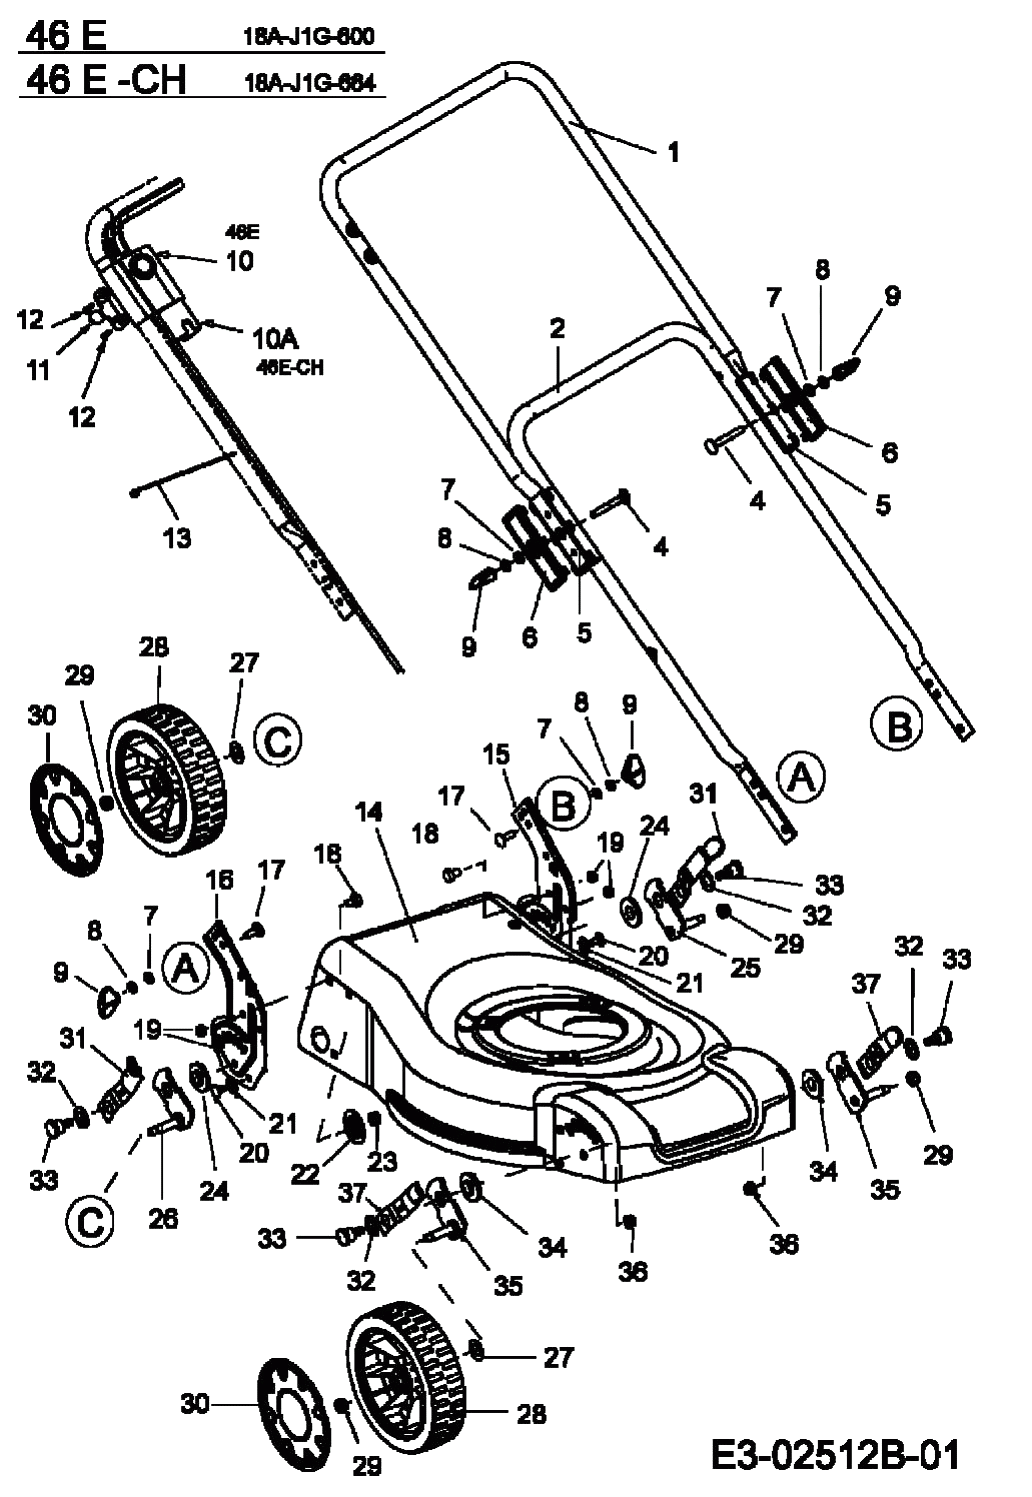 MTD Артикул 18A-J1G-600 (год выпуска 2006). Ручка, колеса, регулятор высоты реза